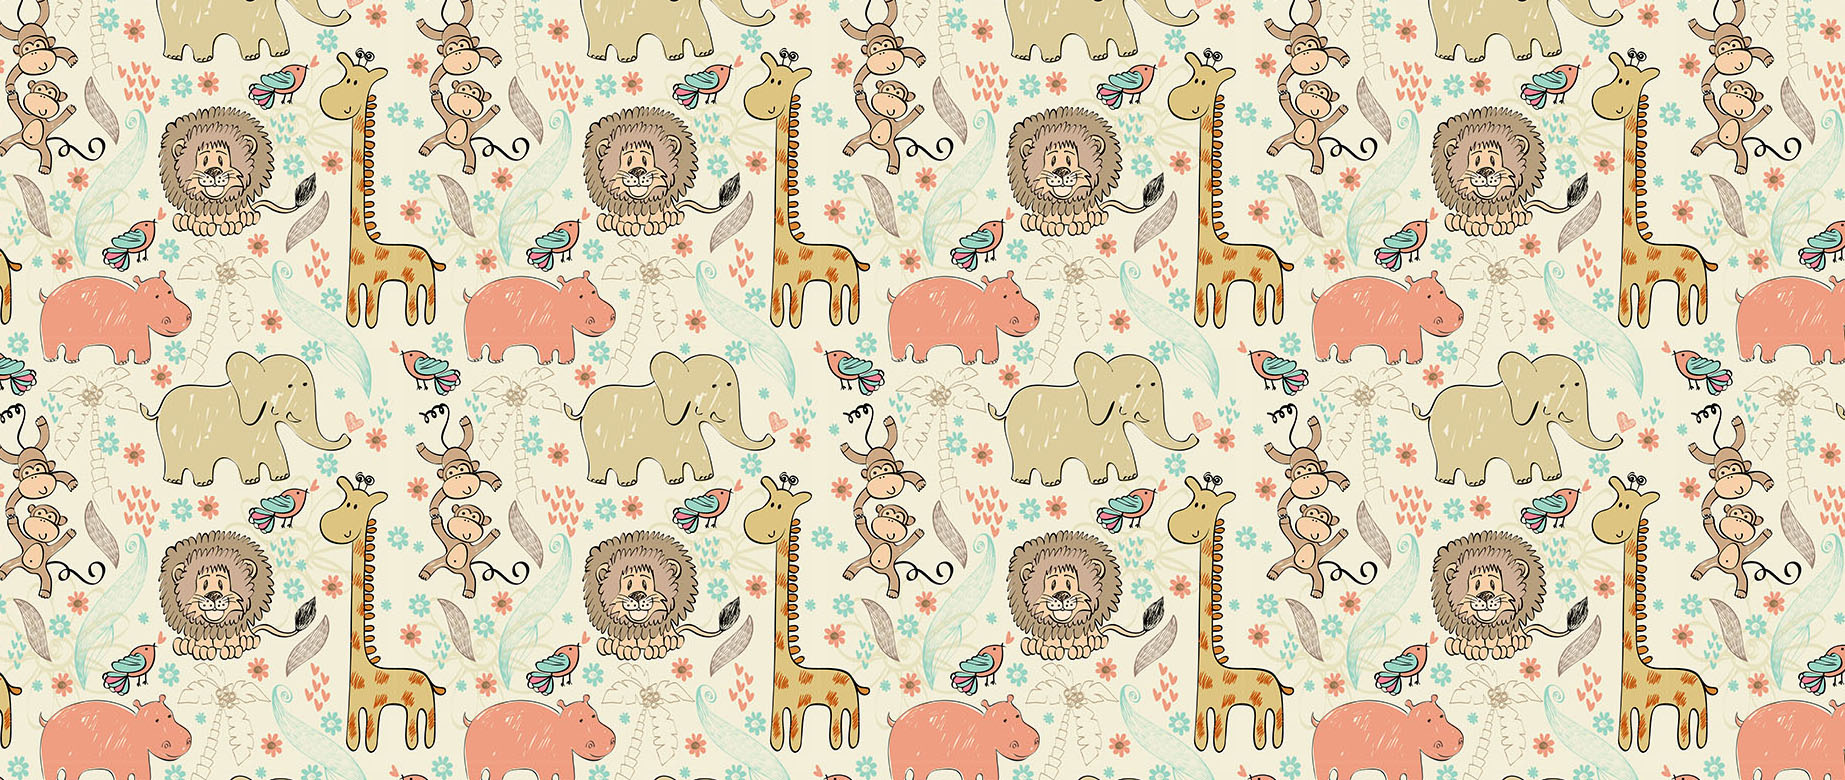 lion-giraffe-monkey-hippo-wallpaper-seamless-repeat-view